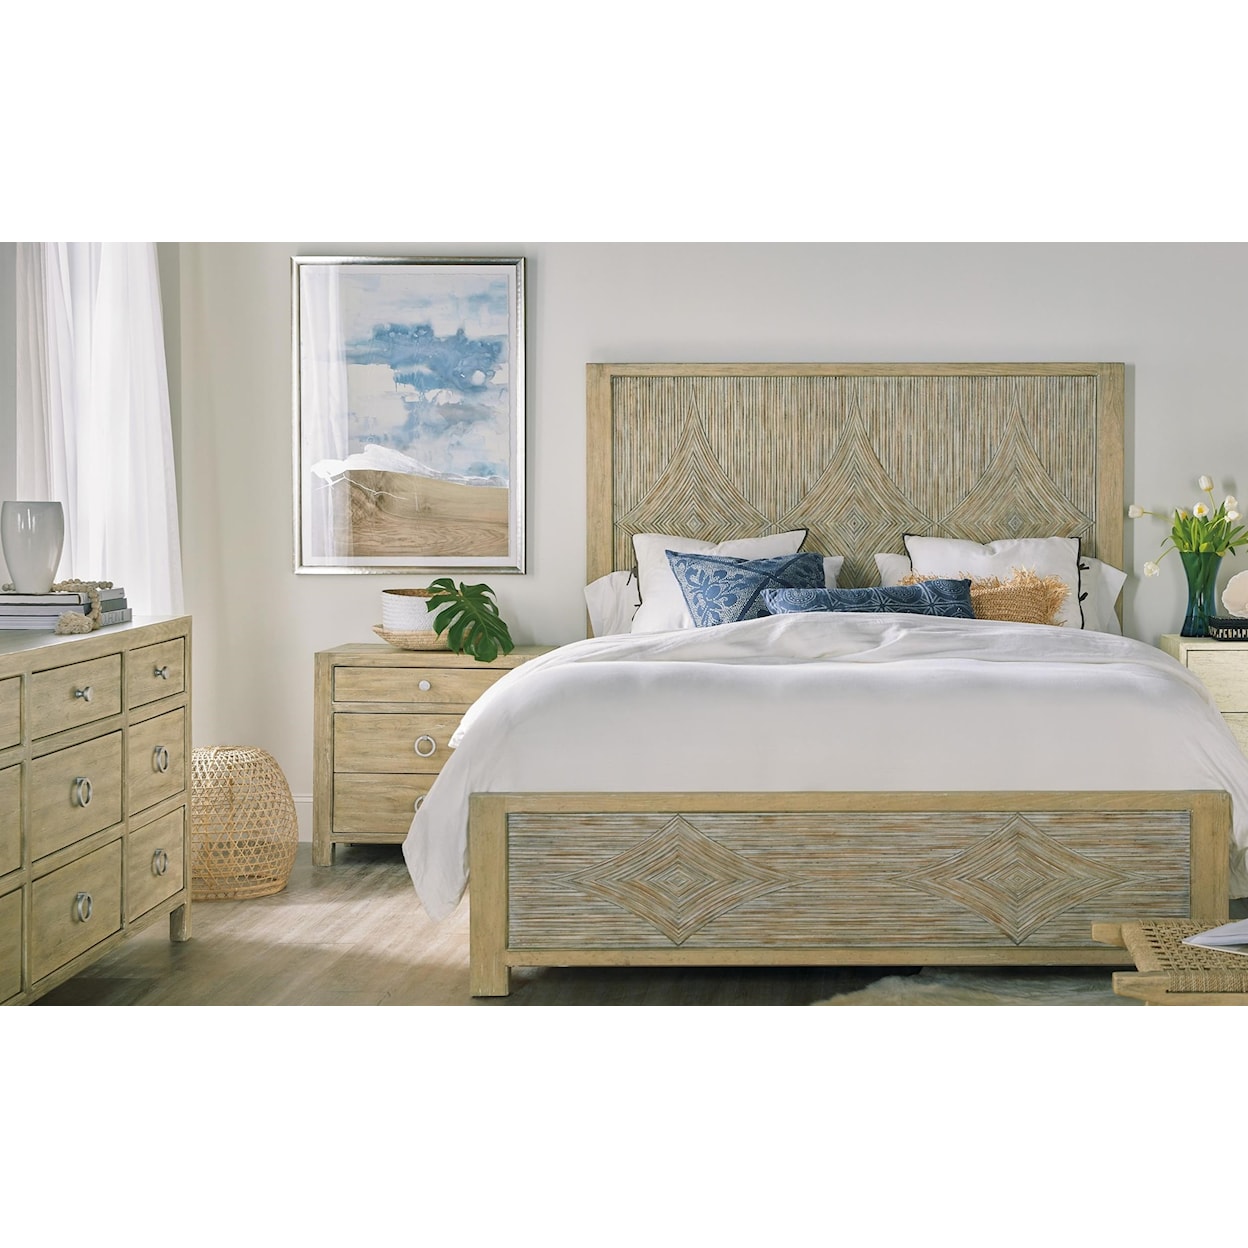 Hooker Furniture Surfrider California King Bedroom Group